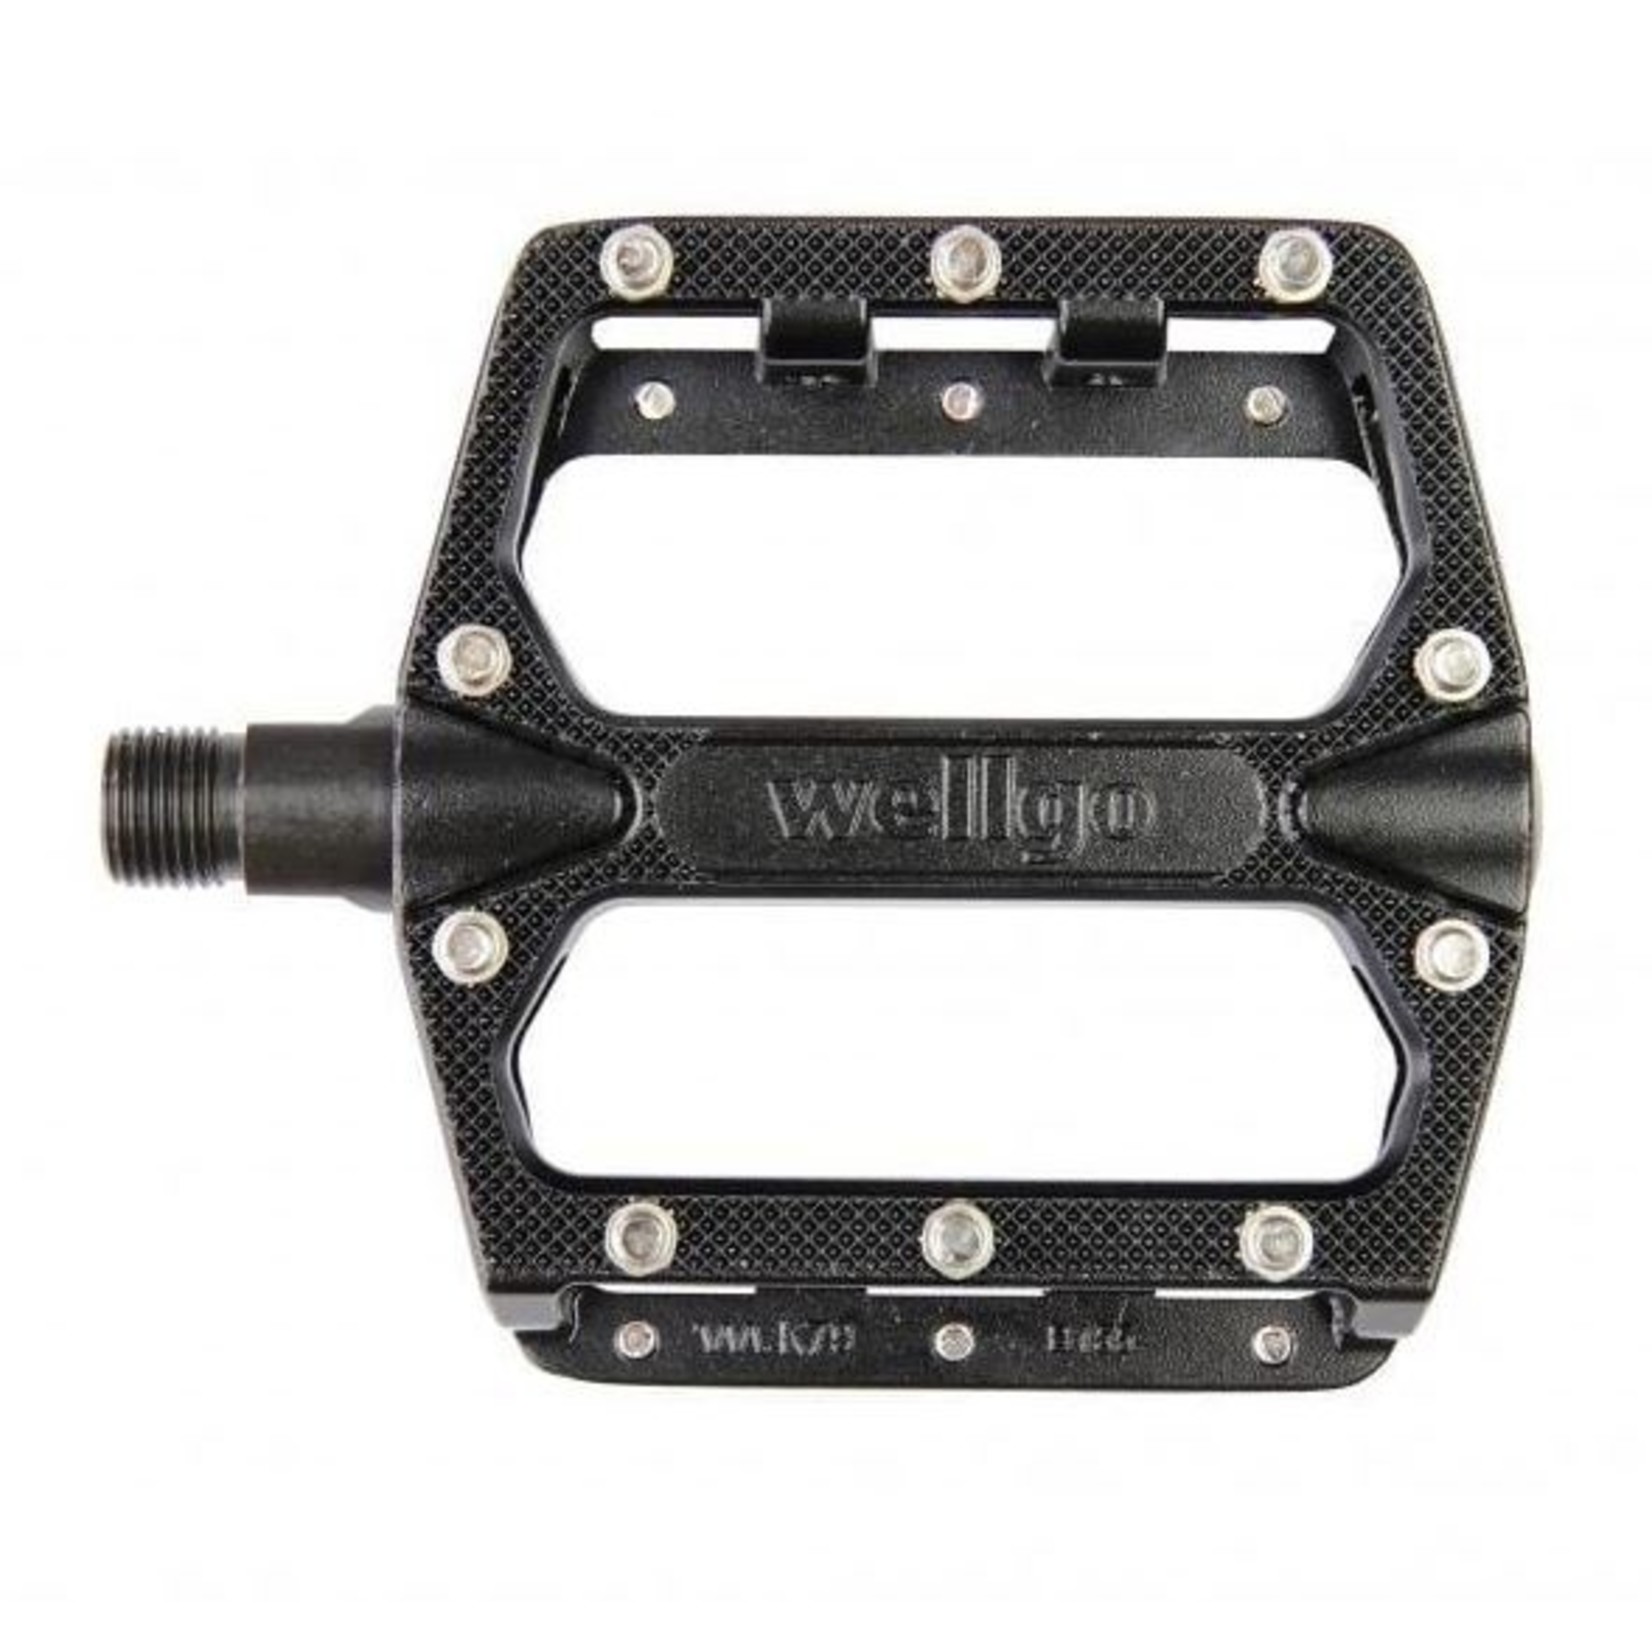 KWT KWT Bicycle QBP Alloy Pedal MTB Platform - 9/16 - Removable Pins - Black